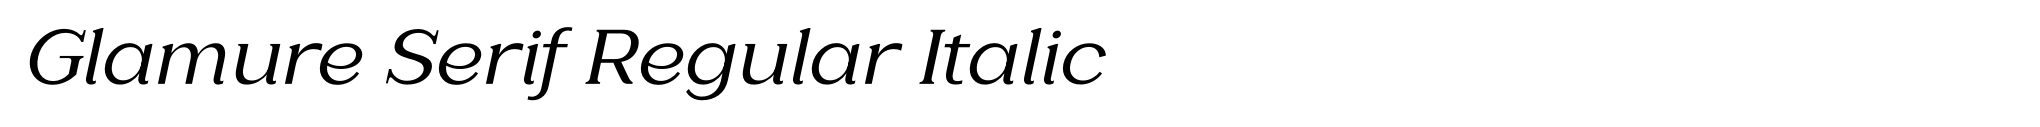 Glamure Serif Regular Italic image